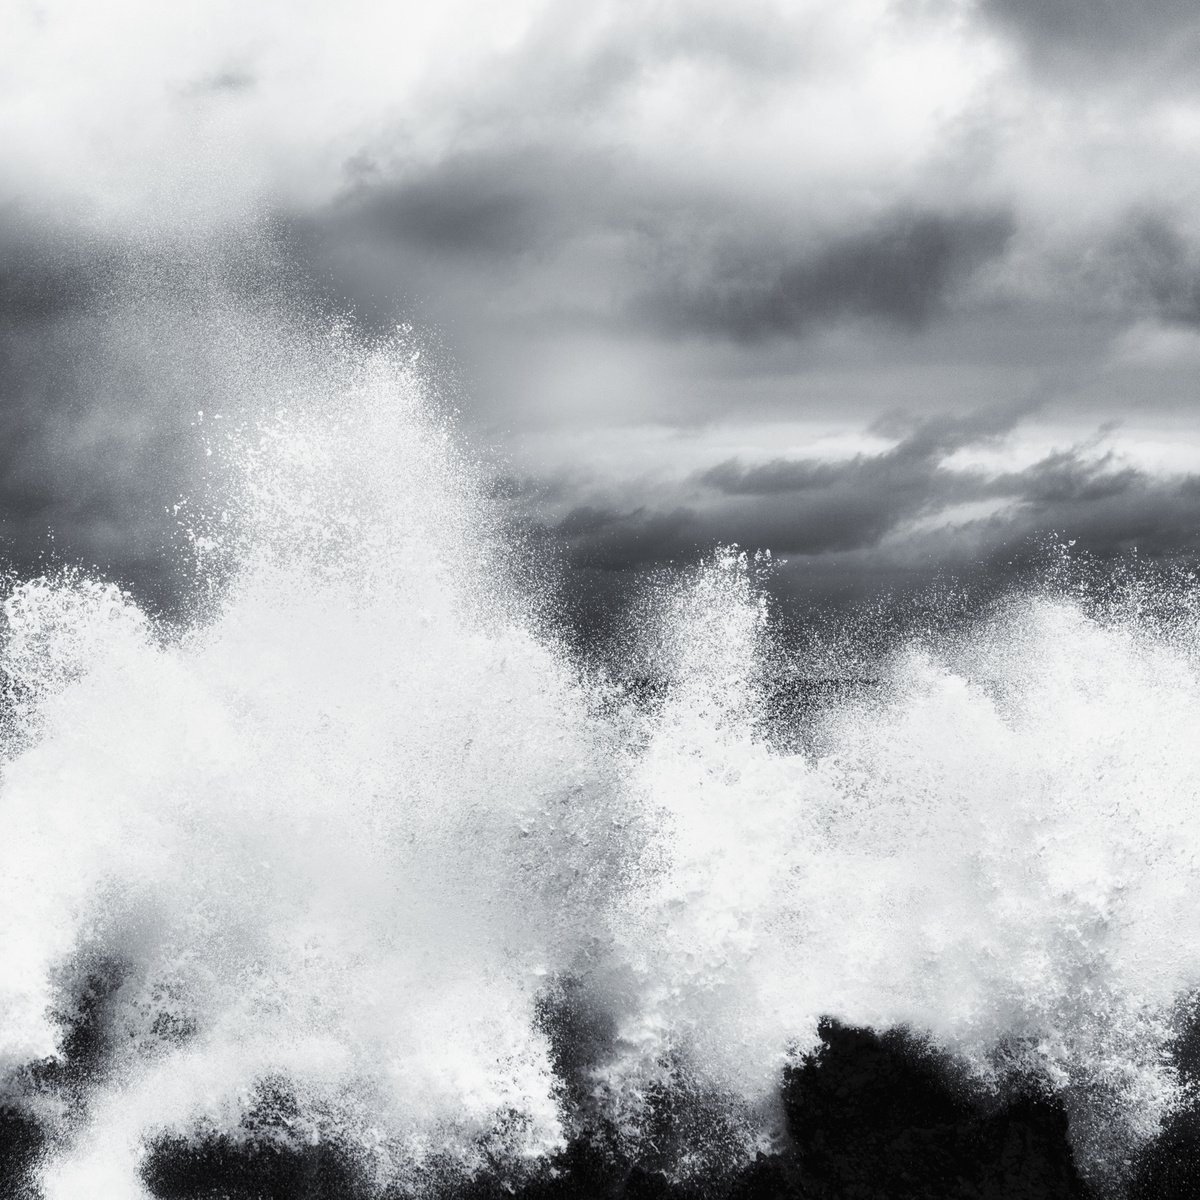 Breaking waves by Karim Carella